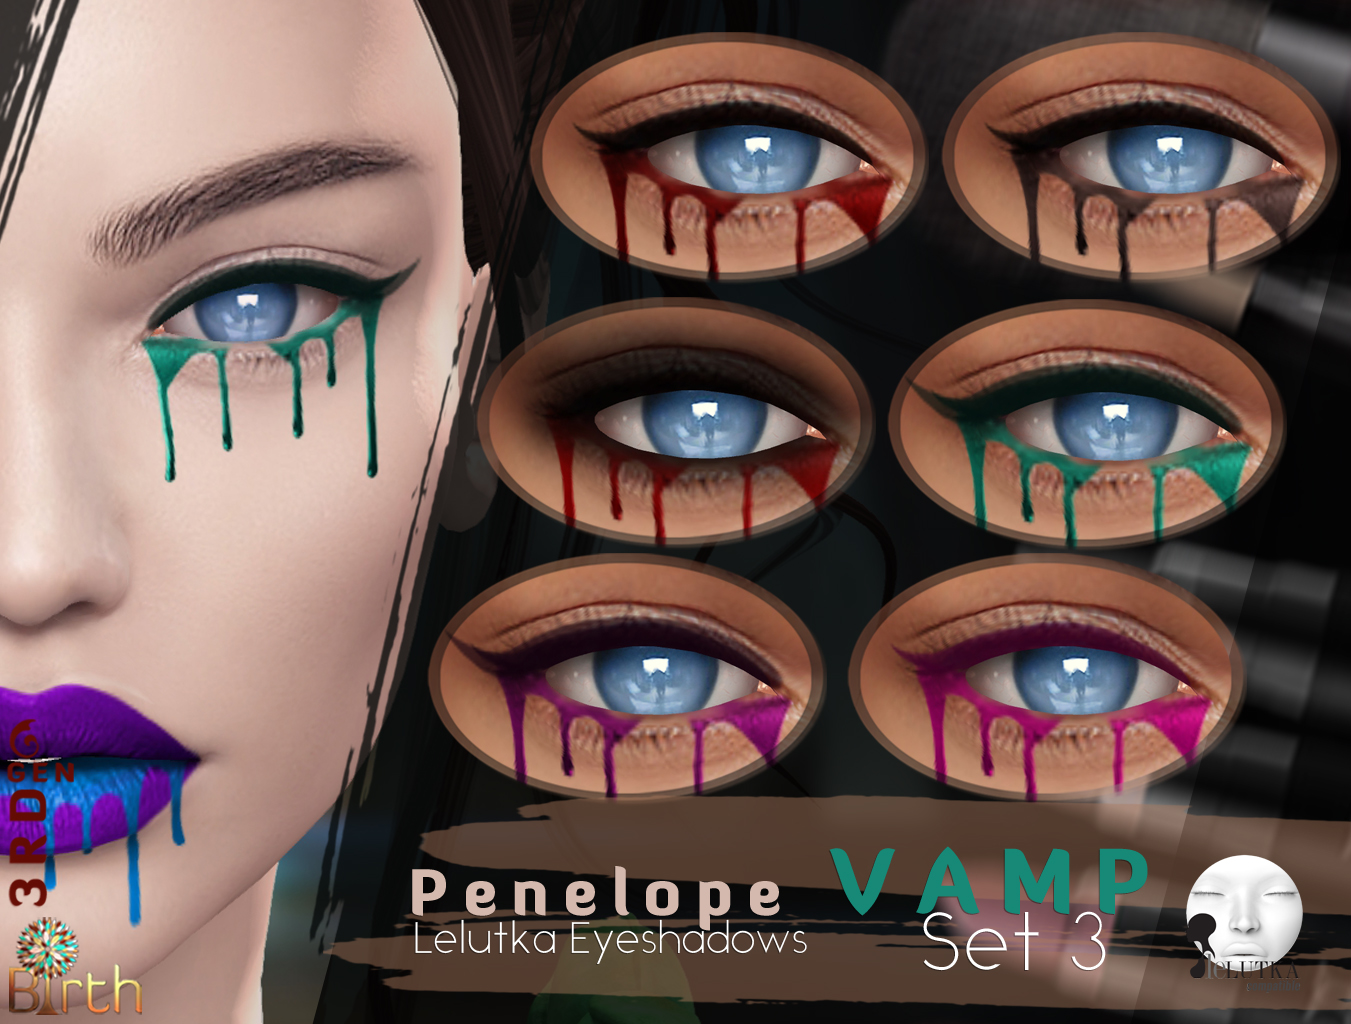 *Birth* Penelope Eyeshadows - Vamp Set 3